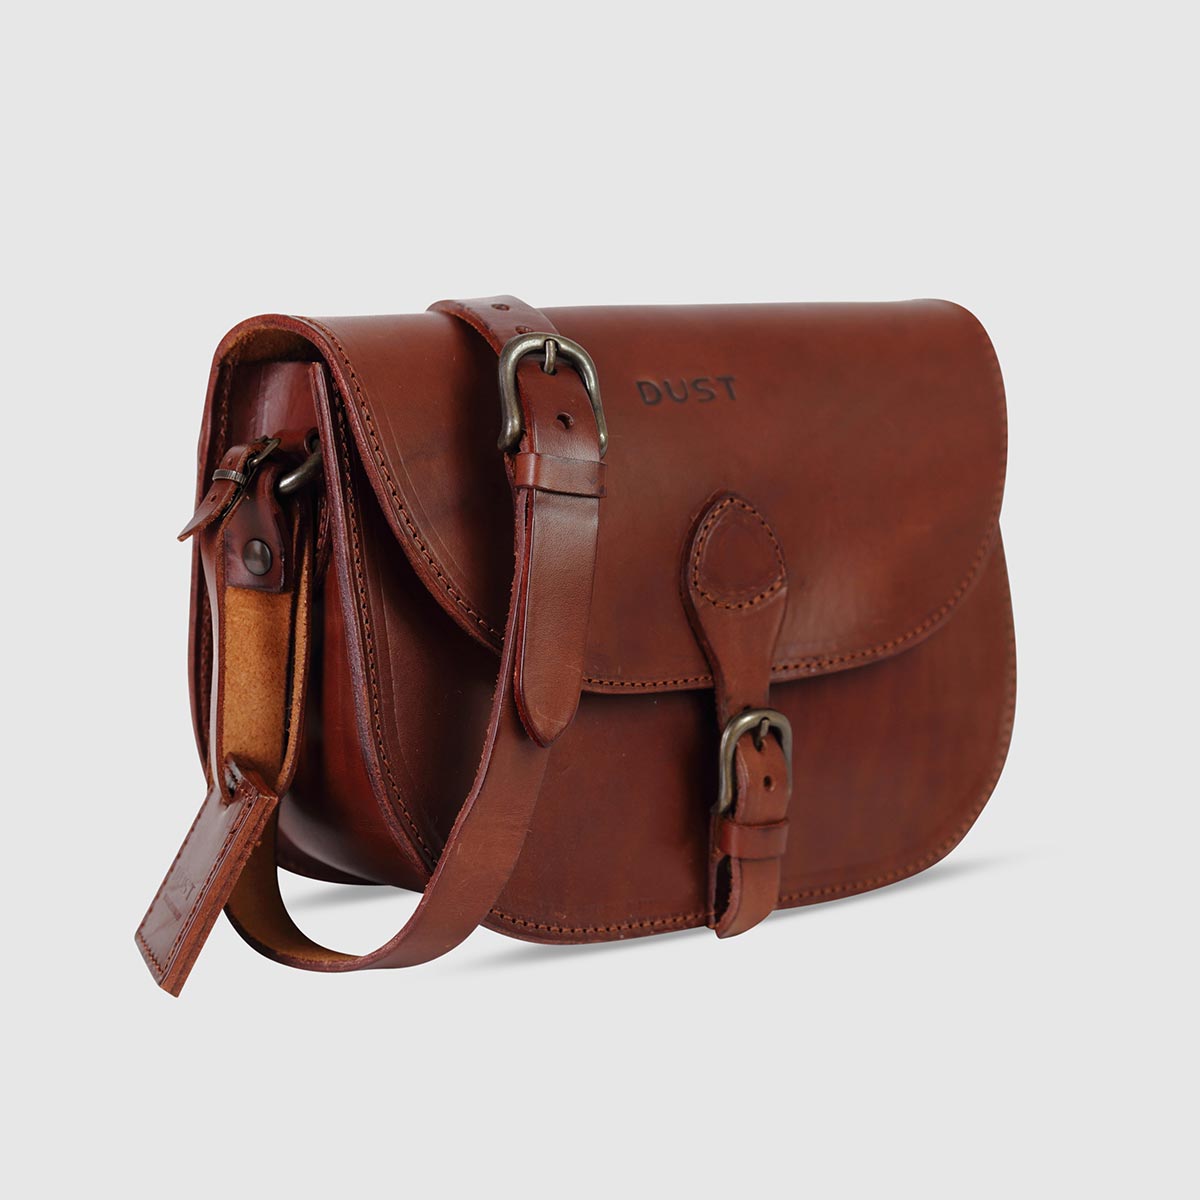 Minimal Shoulder Bag – Havana Leather The Dust on sale 2022 4